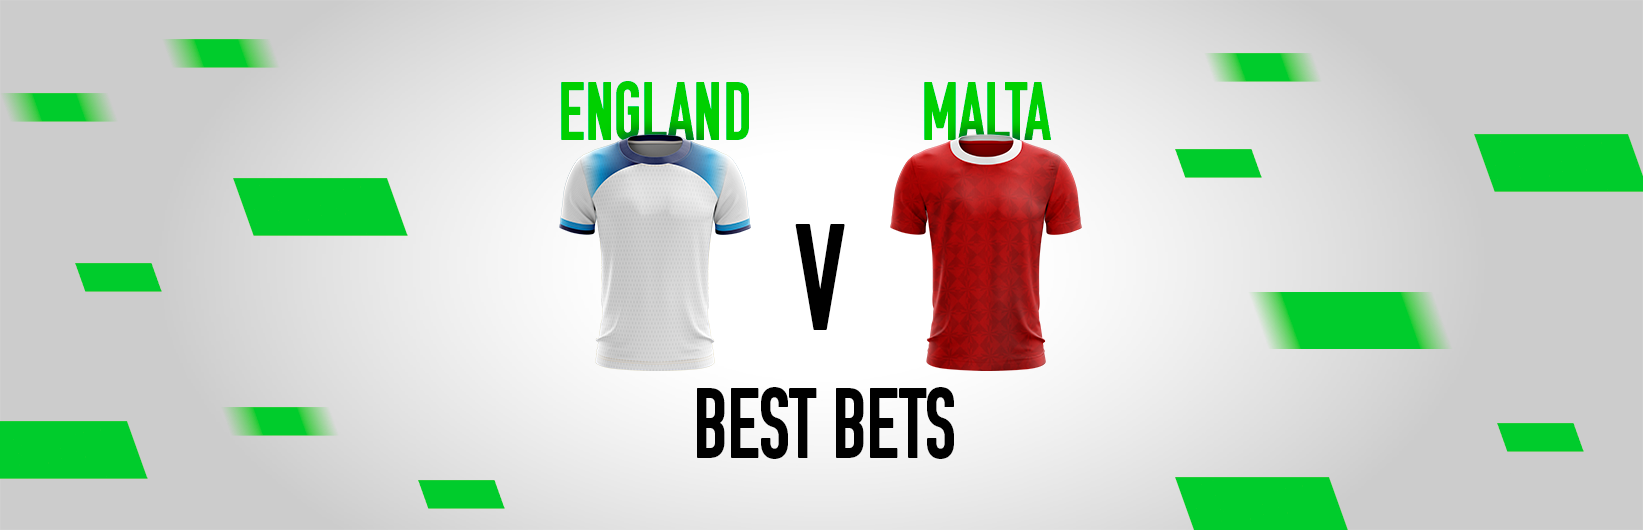 Football tips: Best bets for England v Malta